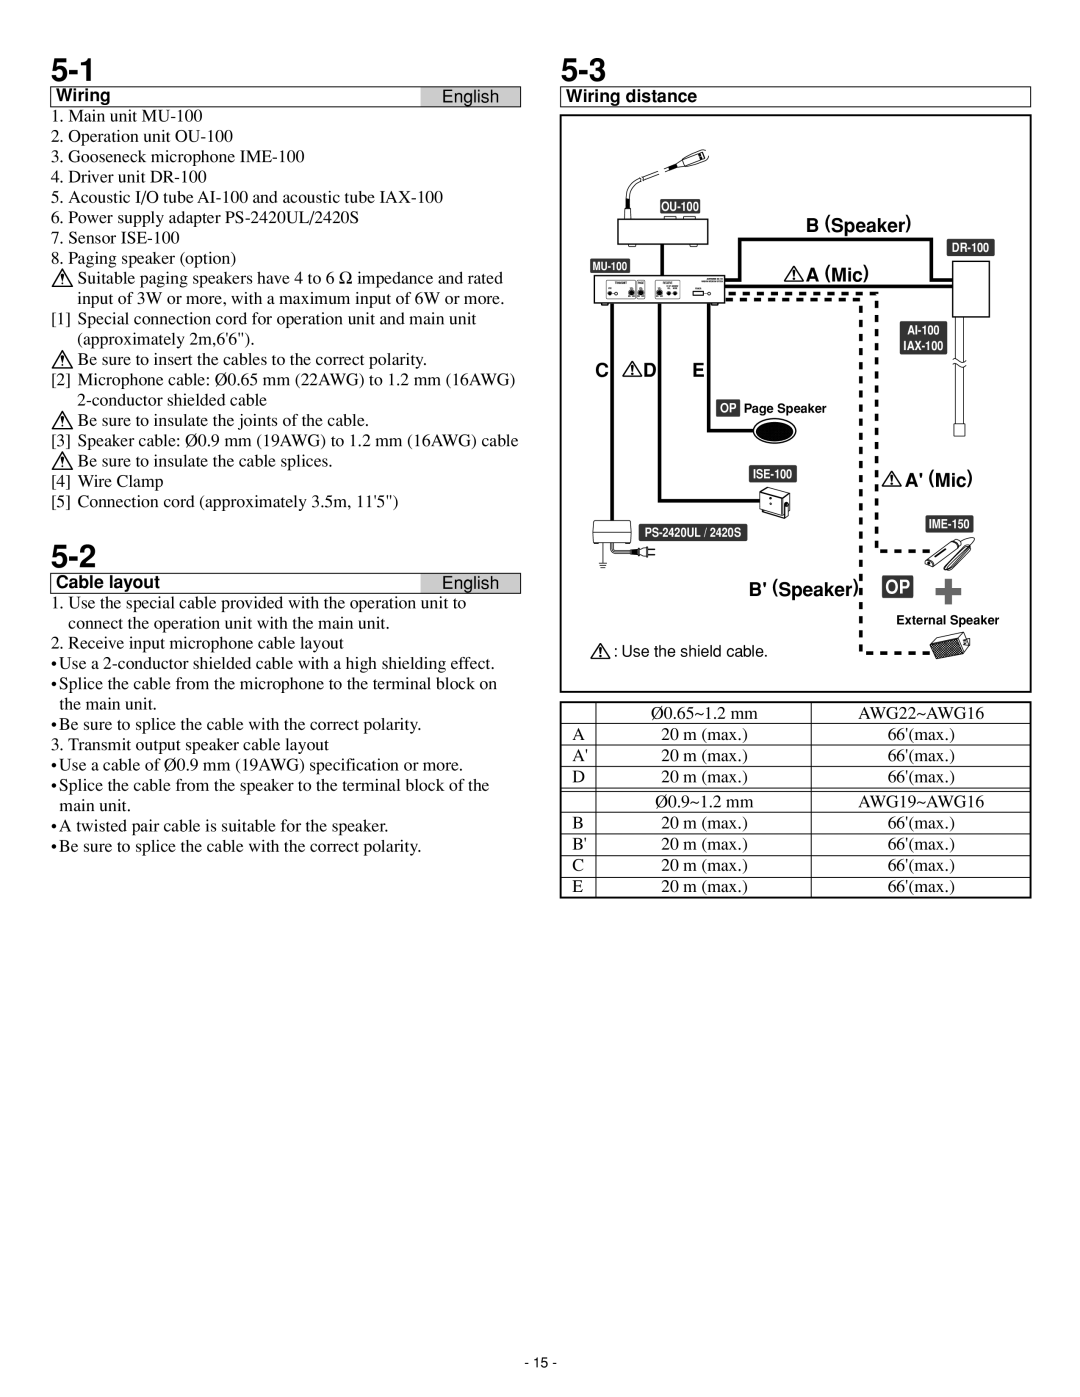 Aiphone ISE-100, Iai-100, IME-100, IME-150, IMU-100, IAX-100 Cable layout, Wiring distance, B Speaker, A Mic, English 